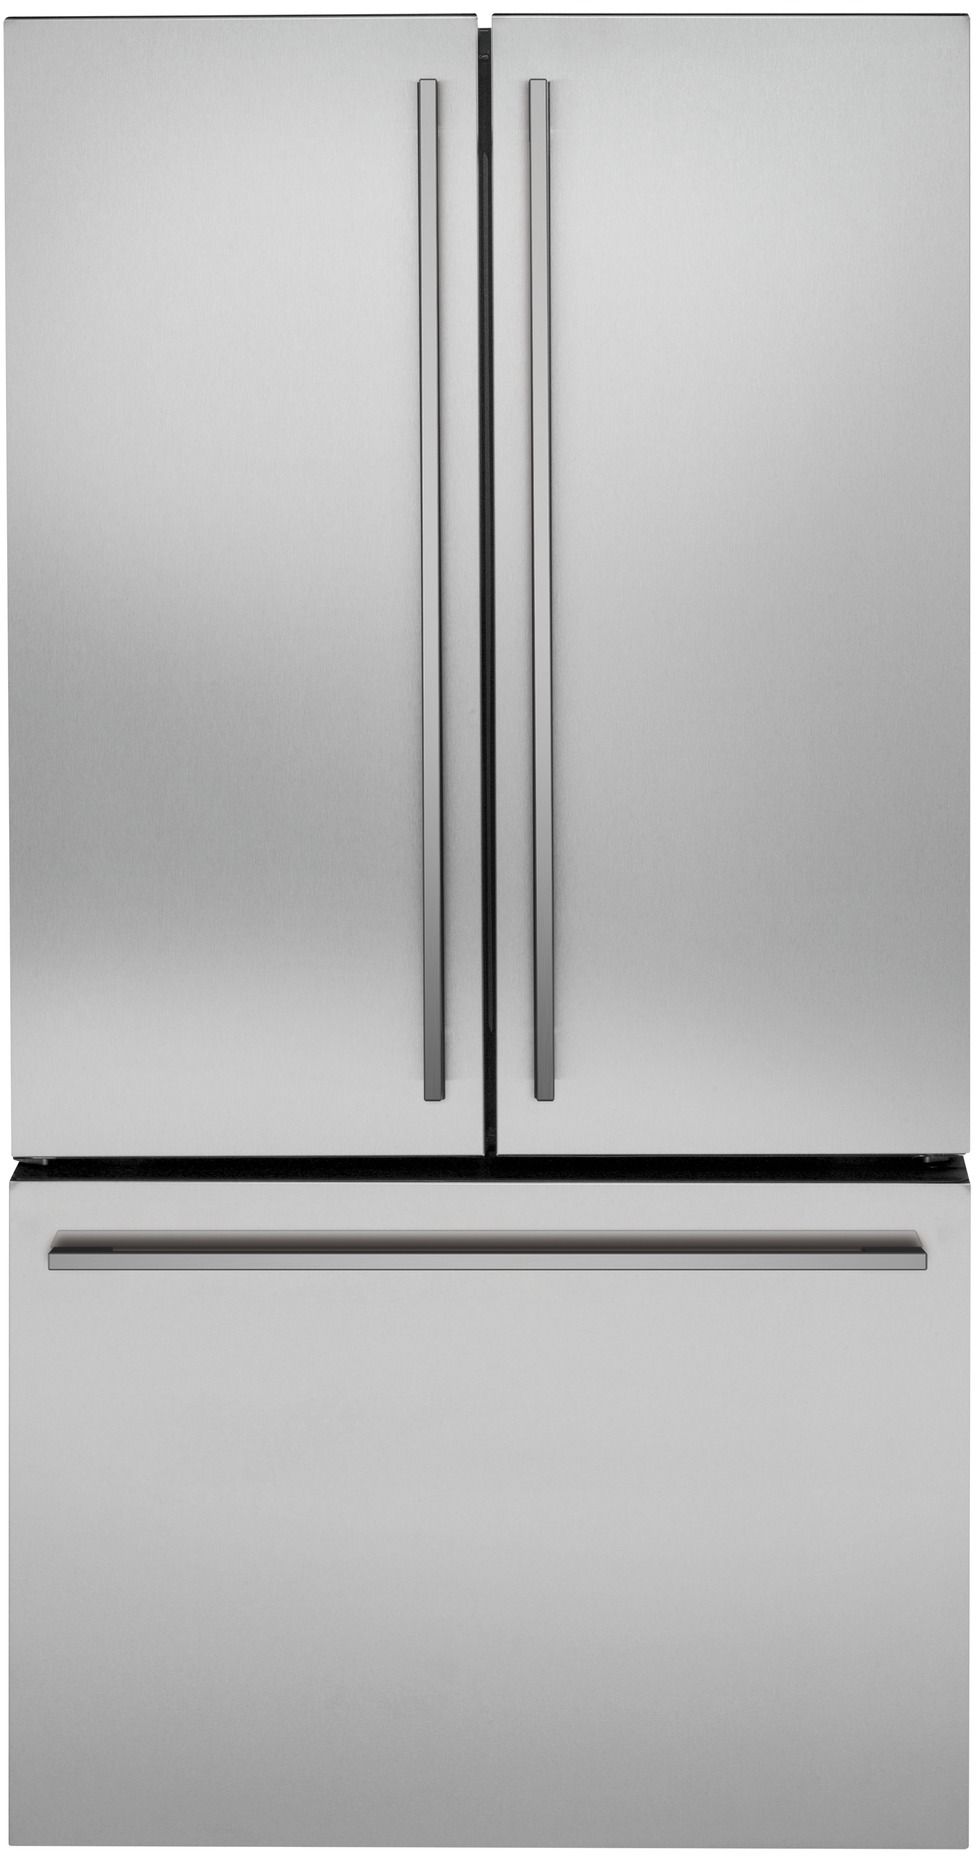 Monogram Minimalist 23.1 Cu. Ft. Stainless Steel Counter Depth French Door Refrigerator